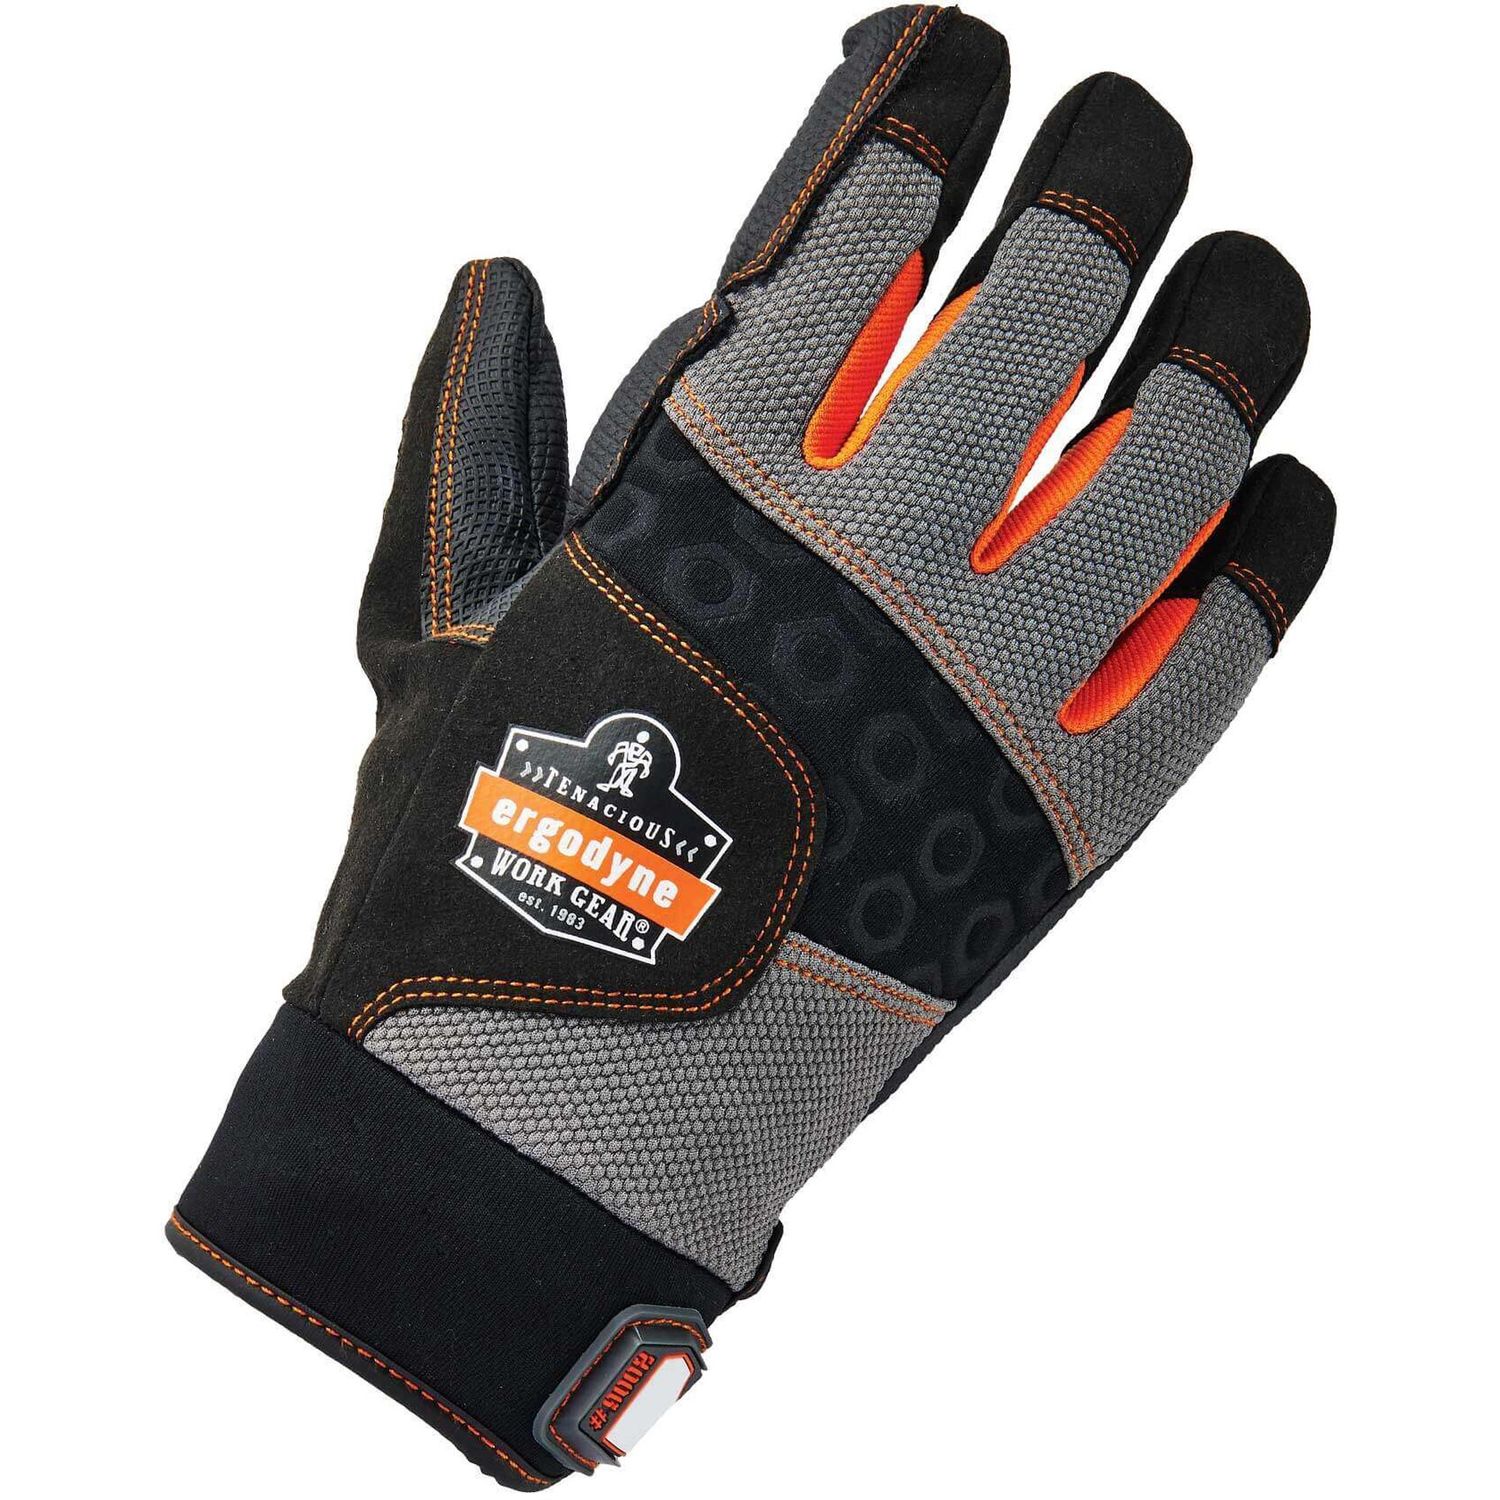 9002 Certified Full-Finger Anti-Vibration Gloves Extra Large Size, Neoprene Knuckle Pad, Black